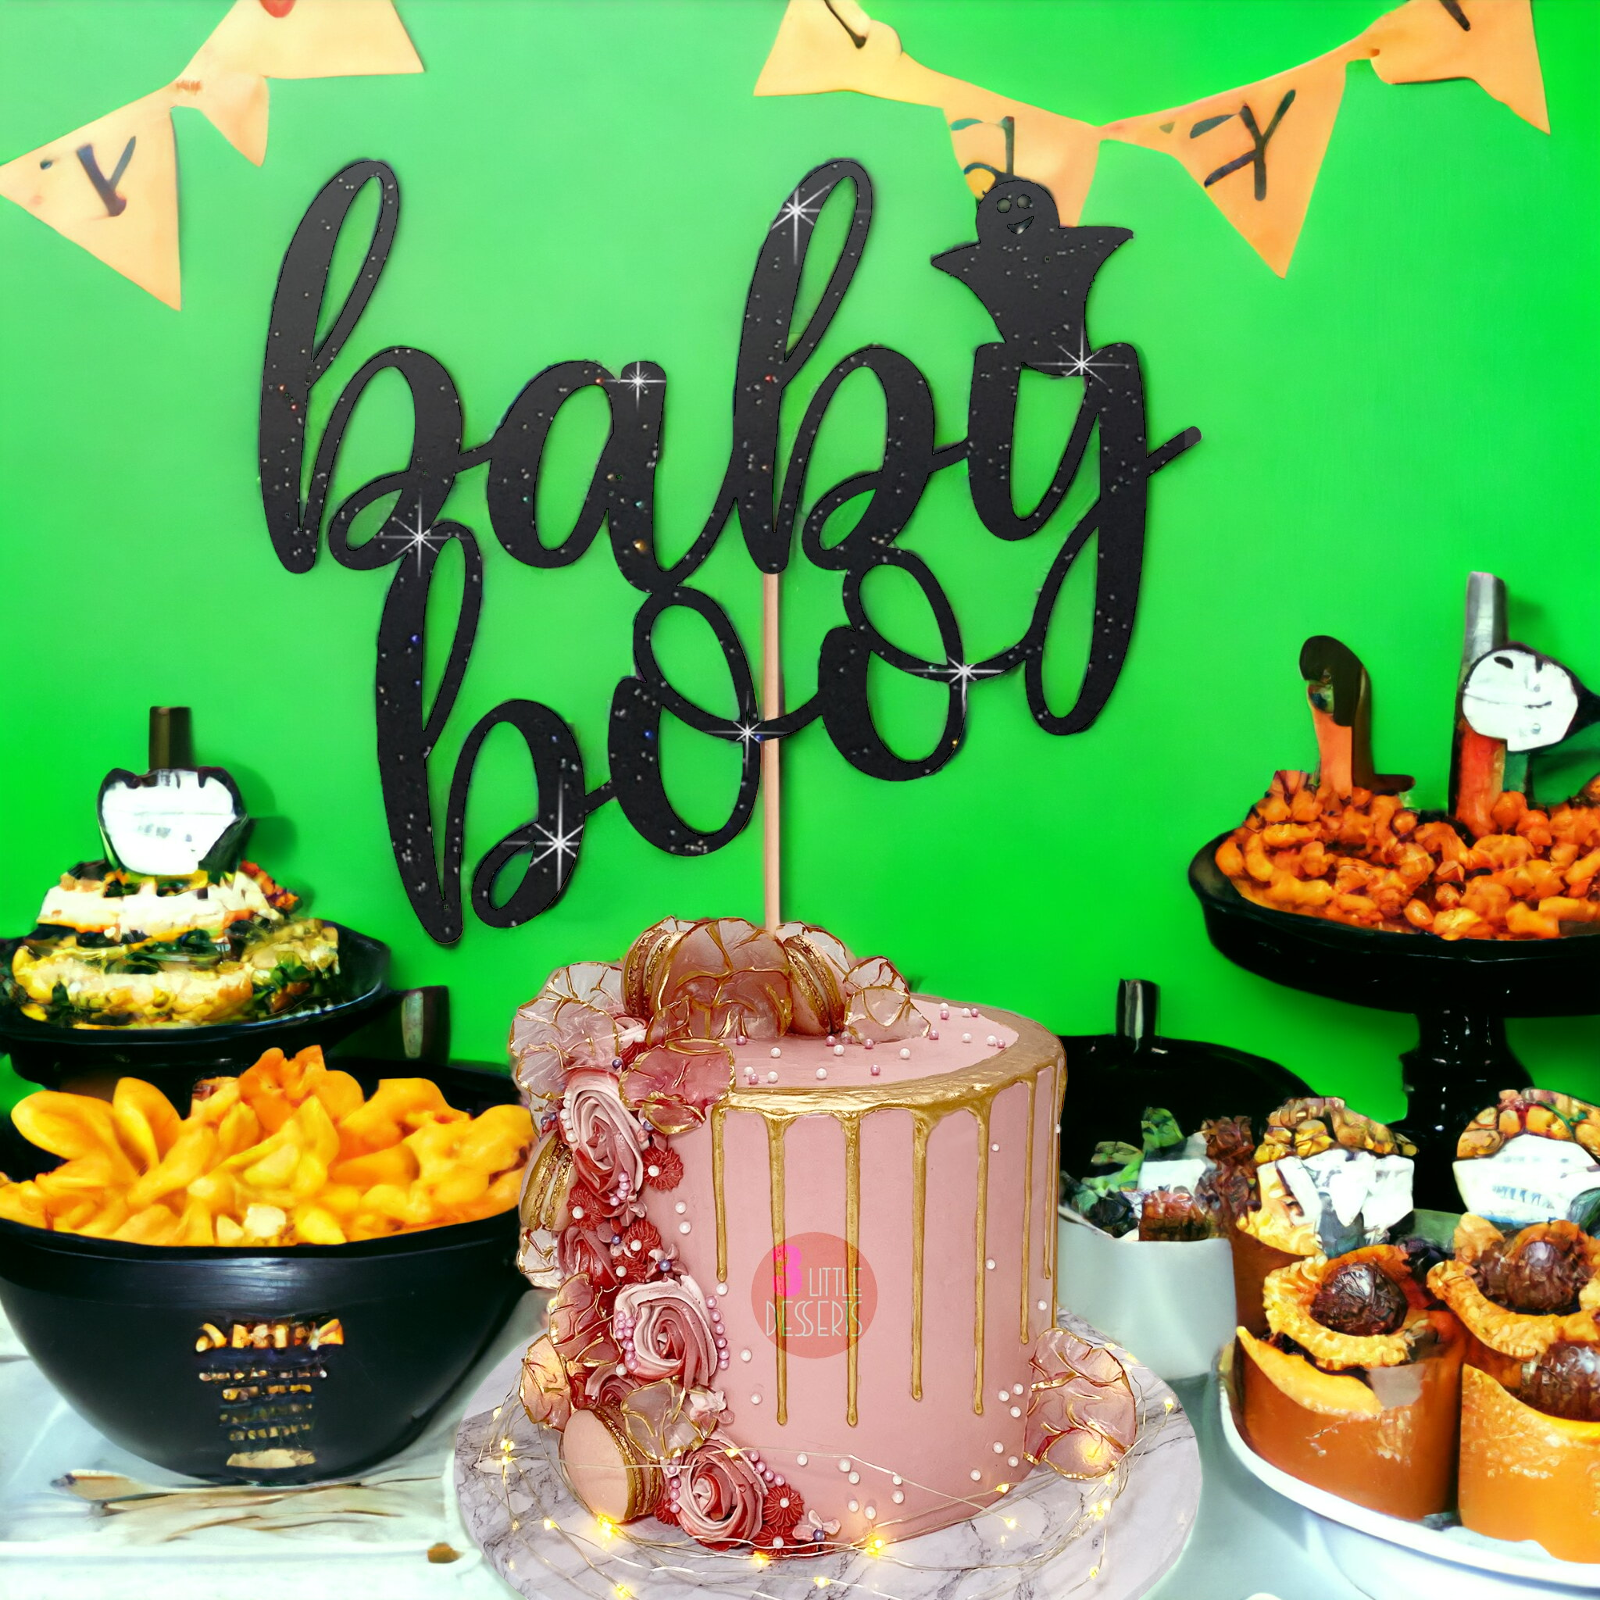 Baby Boo Happy Halloween Cake Topper